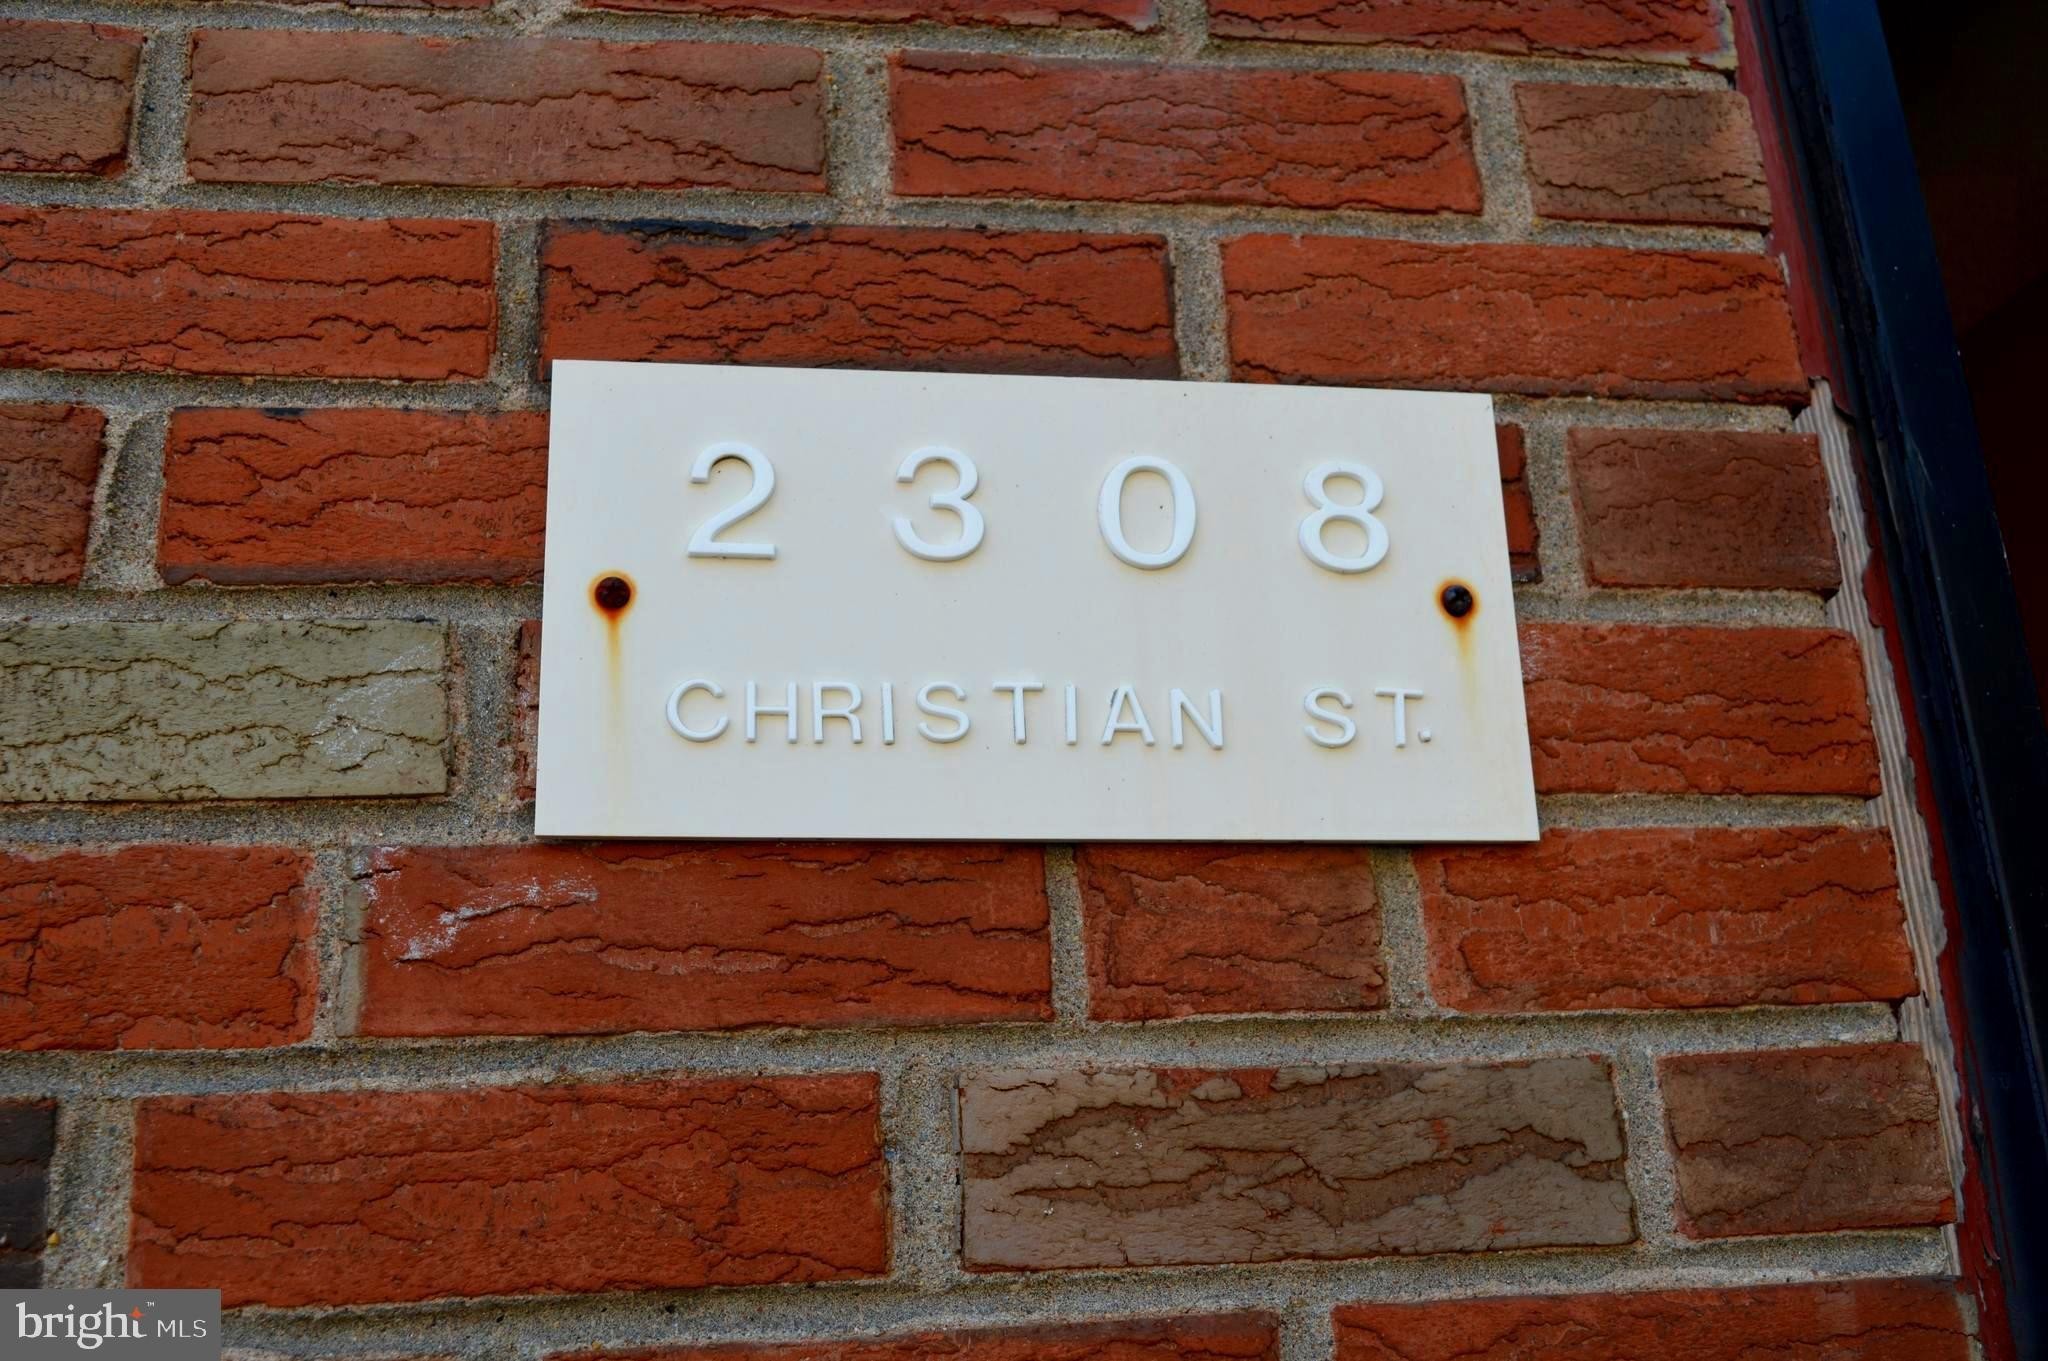 2. 2308 Christian Street